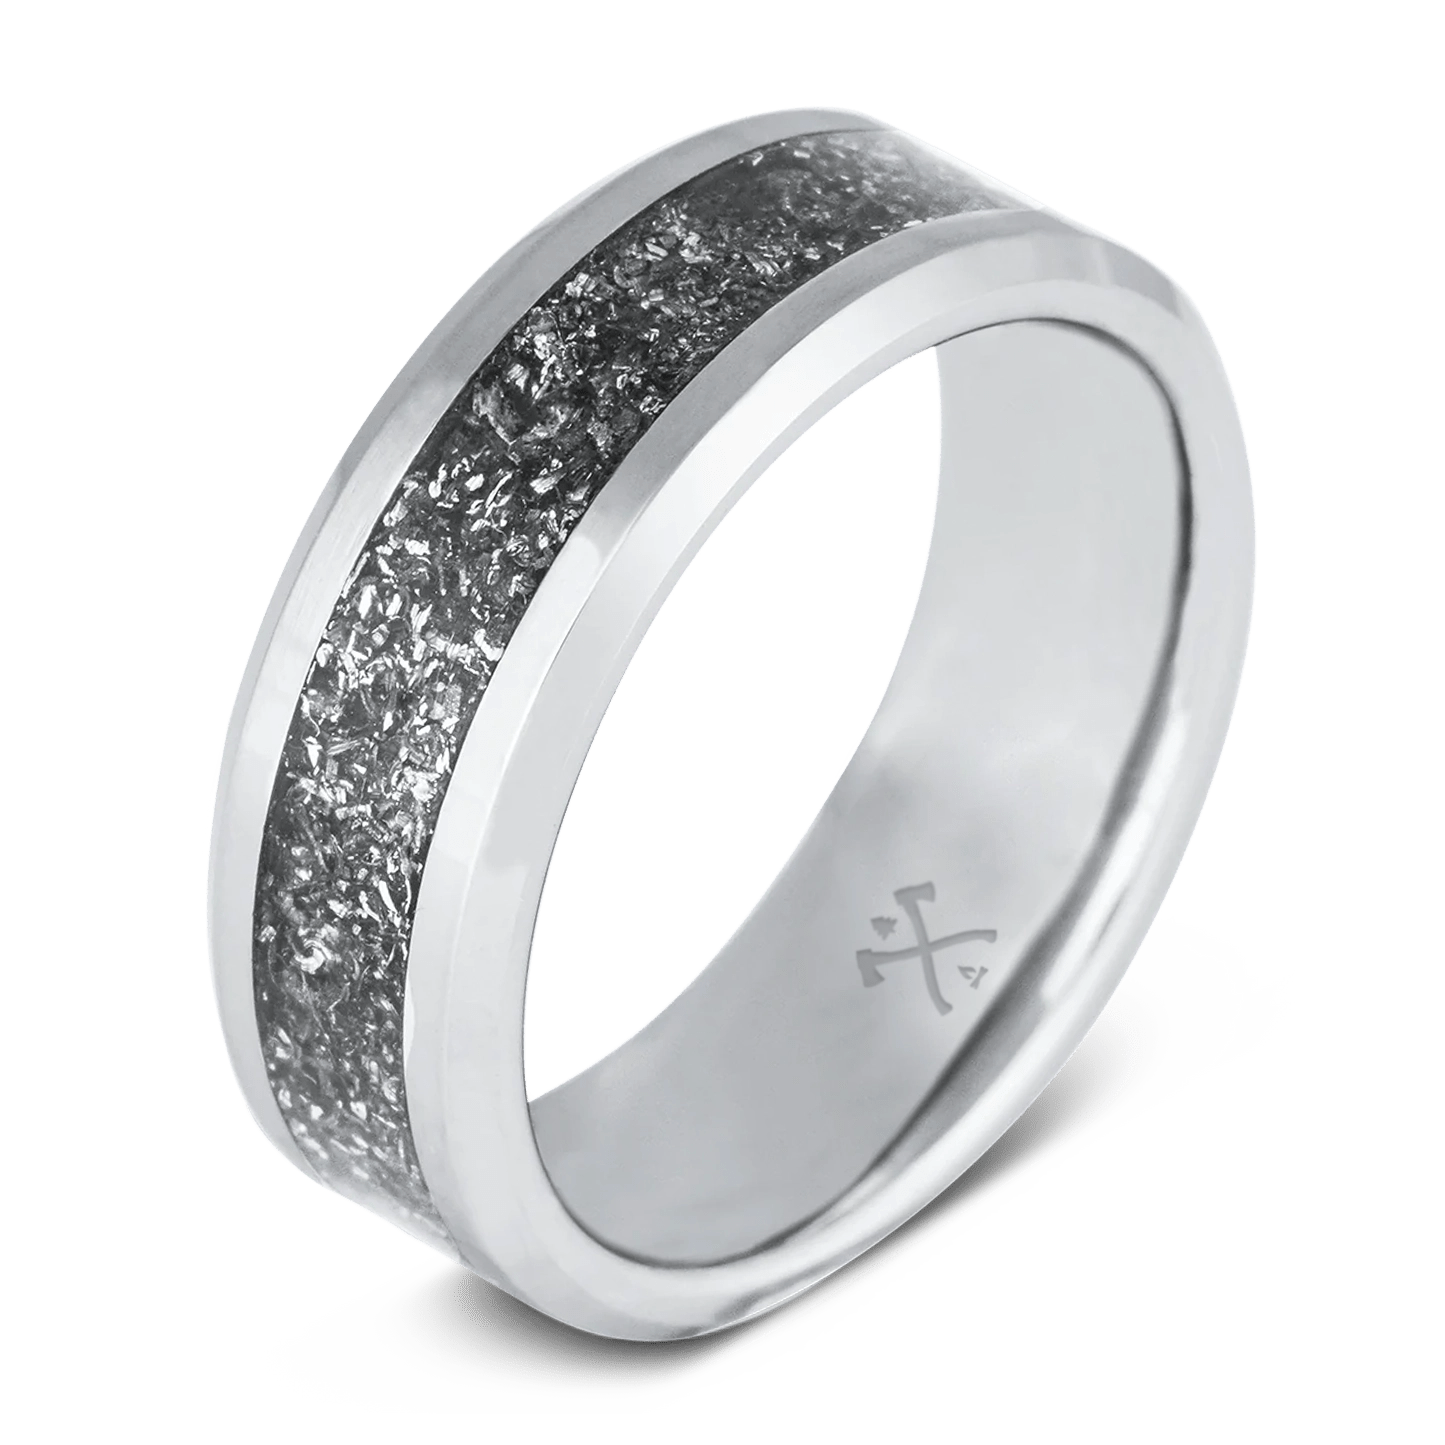 Men's Engagement Rings - A Guide to Diamond Rings for Men